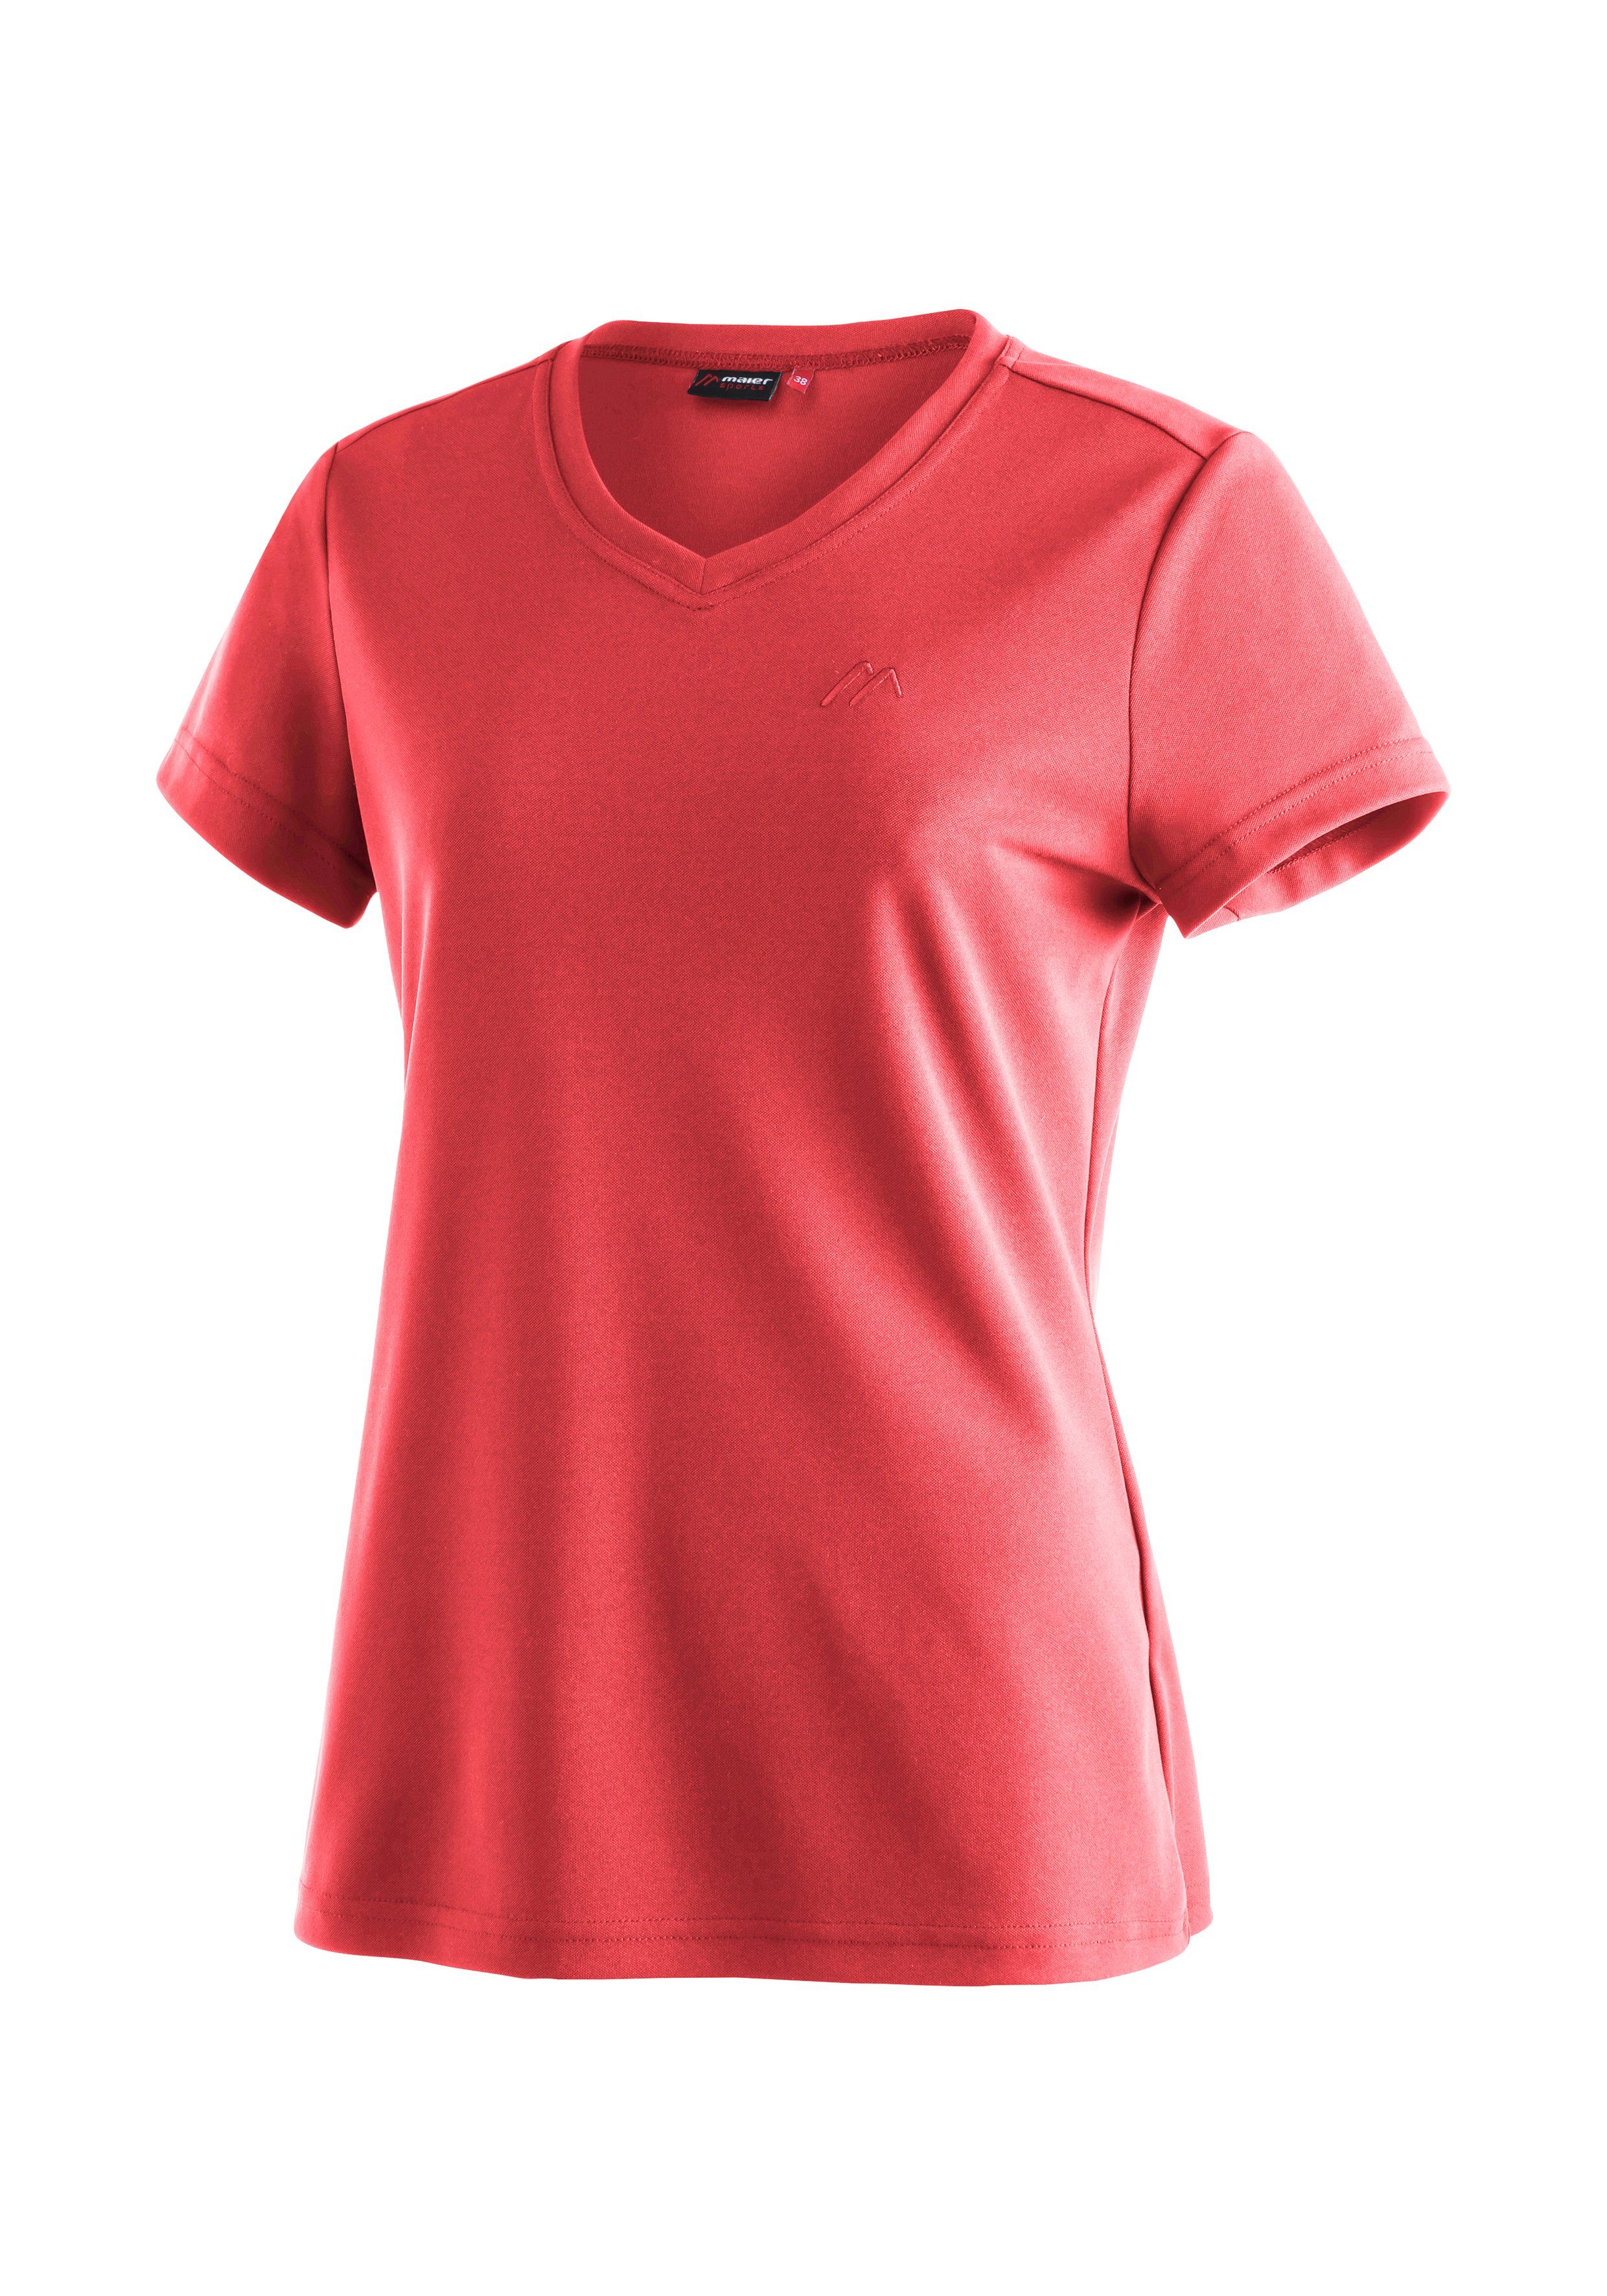 Maier Sports Funktionsshirt Trudy Damen und T-Shirt, Freizeit Kurzarmshirt hellrot für Wandern